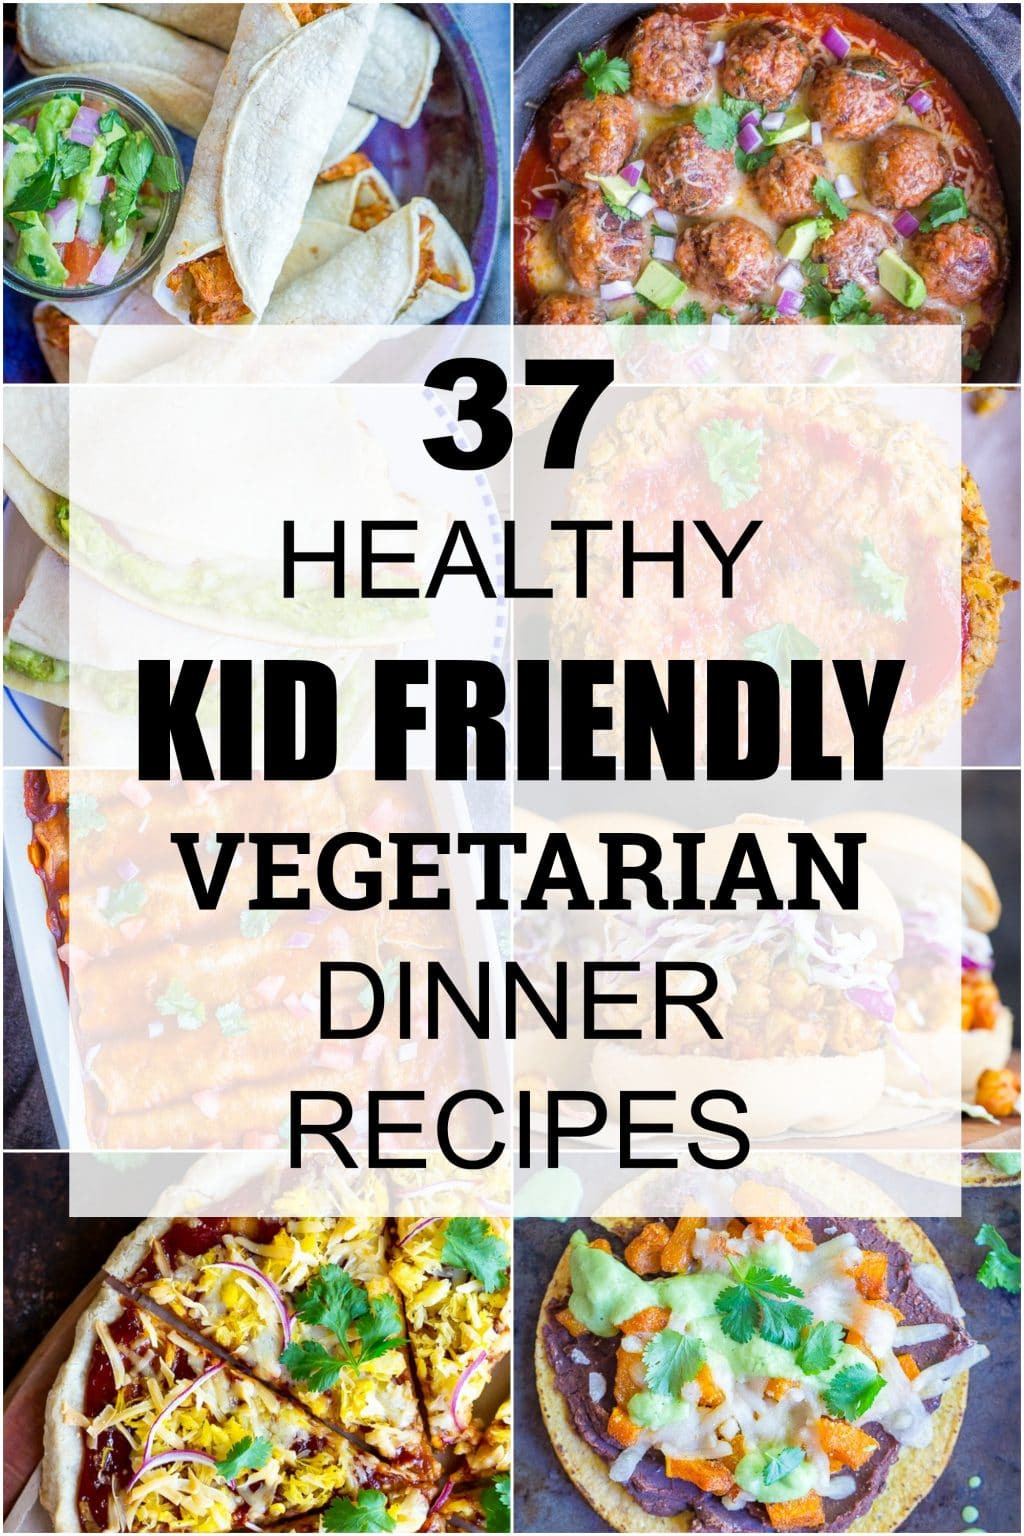 Healthy Kid Friendly Dinner Recipes
 37 Healthy Kid Friendly Ve arian Dinner Recipes She